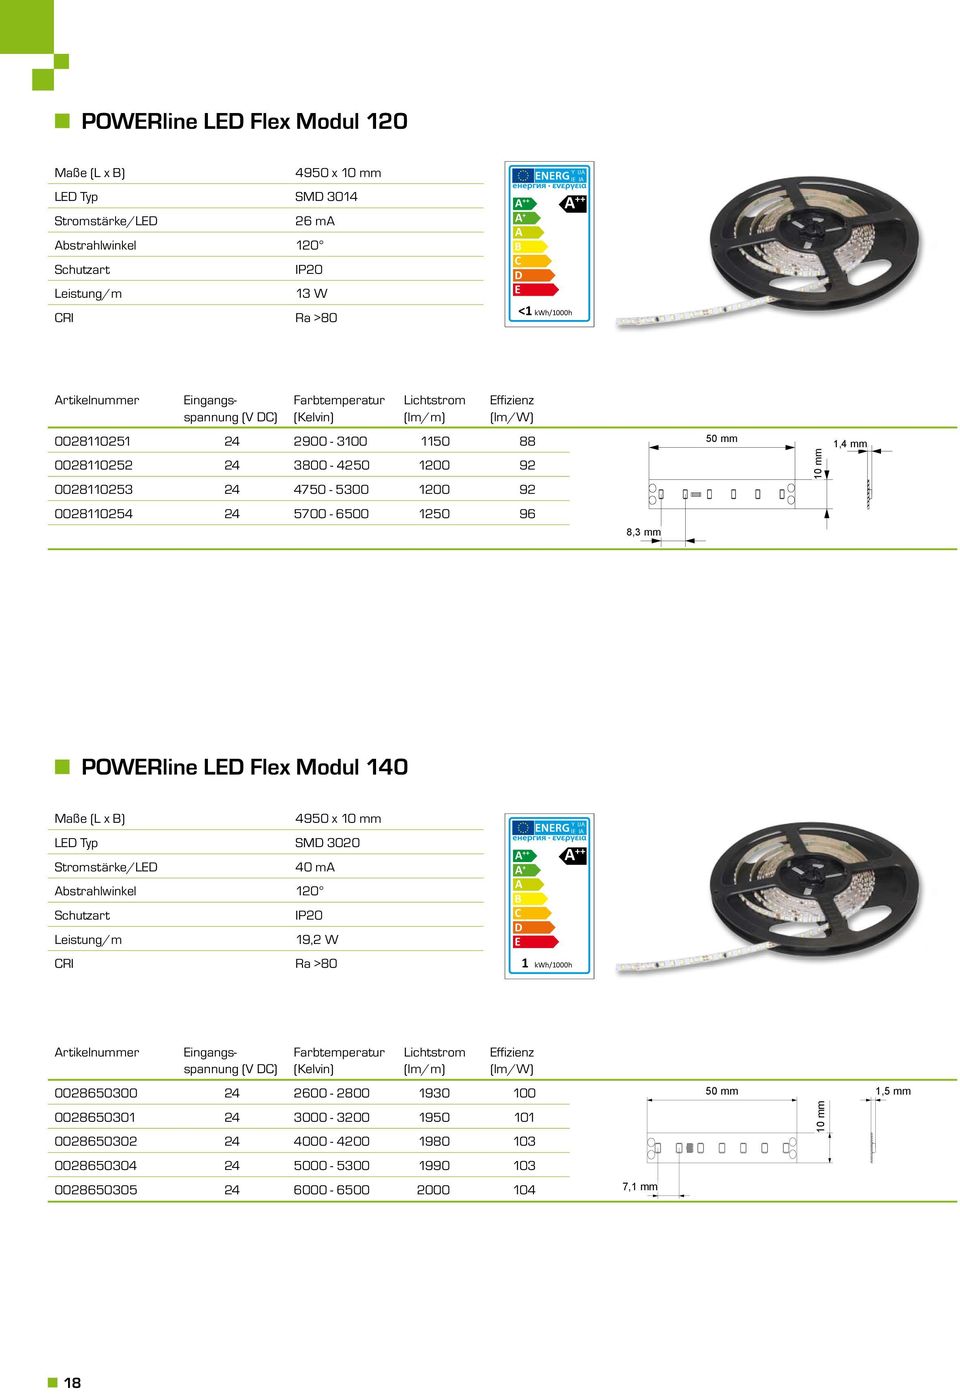 LED Flex Modul 140 4950 x 10 mm LED Typ SMD 3020 40 ma IP20 19,2 W CRI Ra >80 A + A B C D E 1 kwh/1000h Y IJA IE IA (V DC) Farbtemperatur (Kelvin) Lichtstrom (lm/m) Effizienz (lm/w)